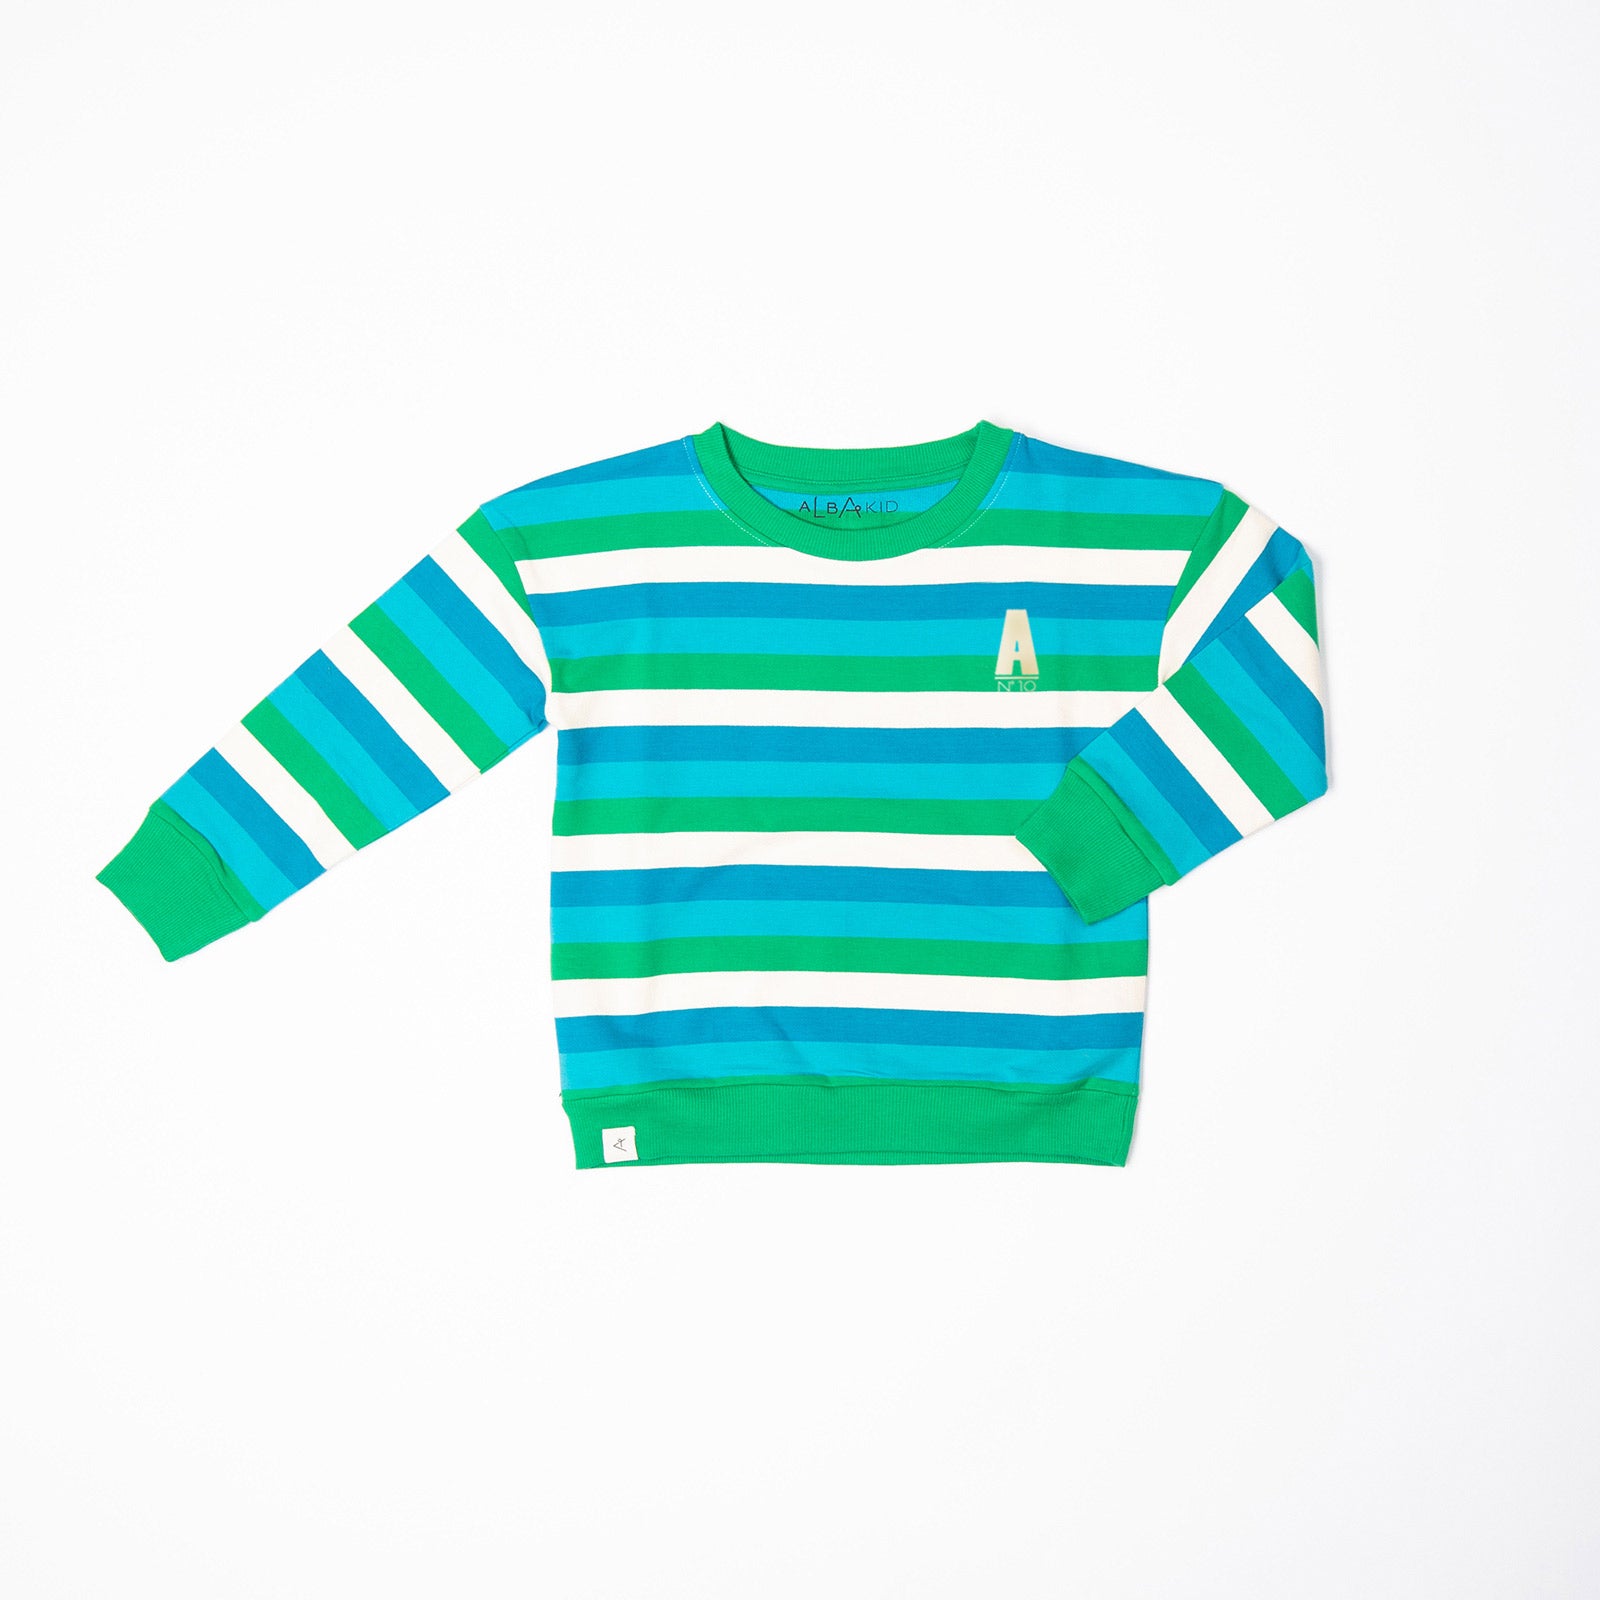 Alba - Sean Sweater - Jelly Bean Stripes